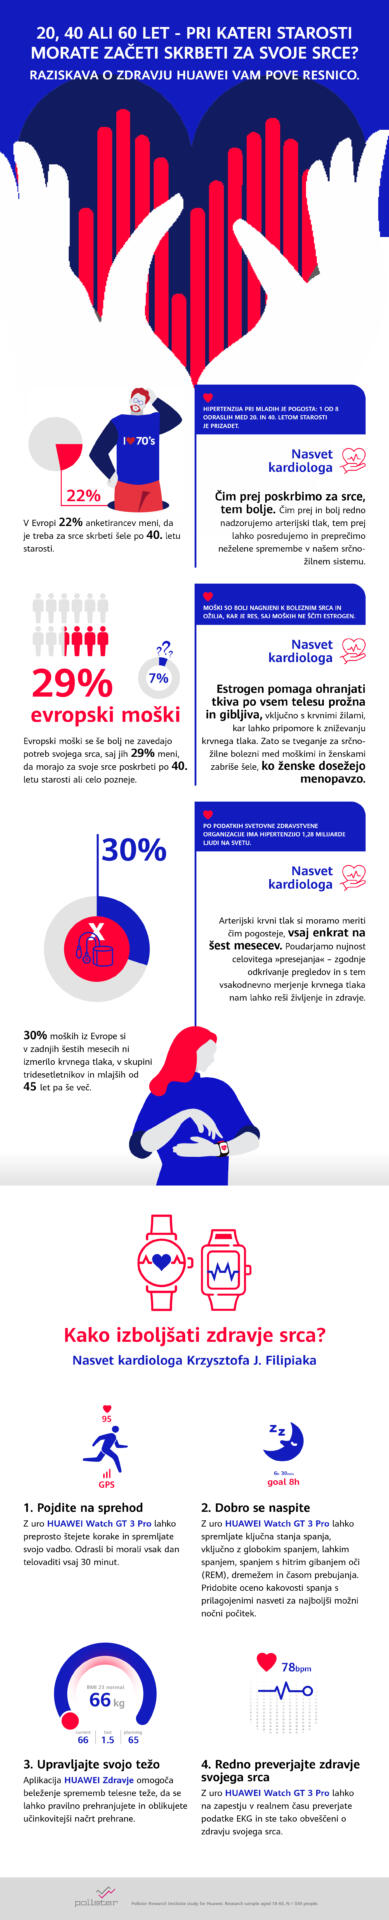 Infografika o skrbi za srce